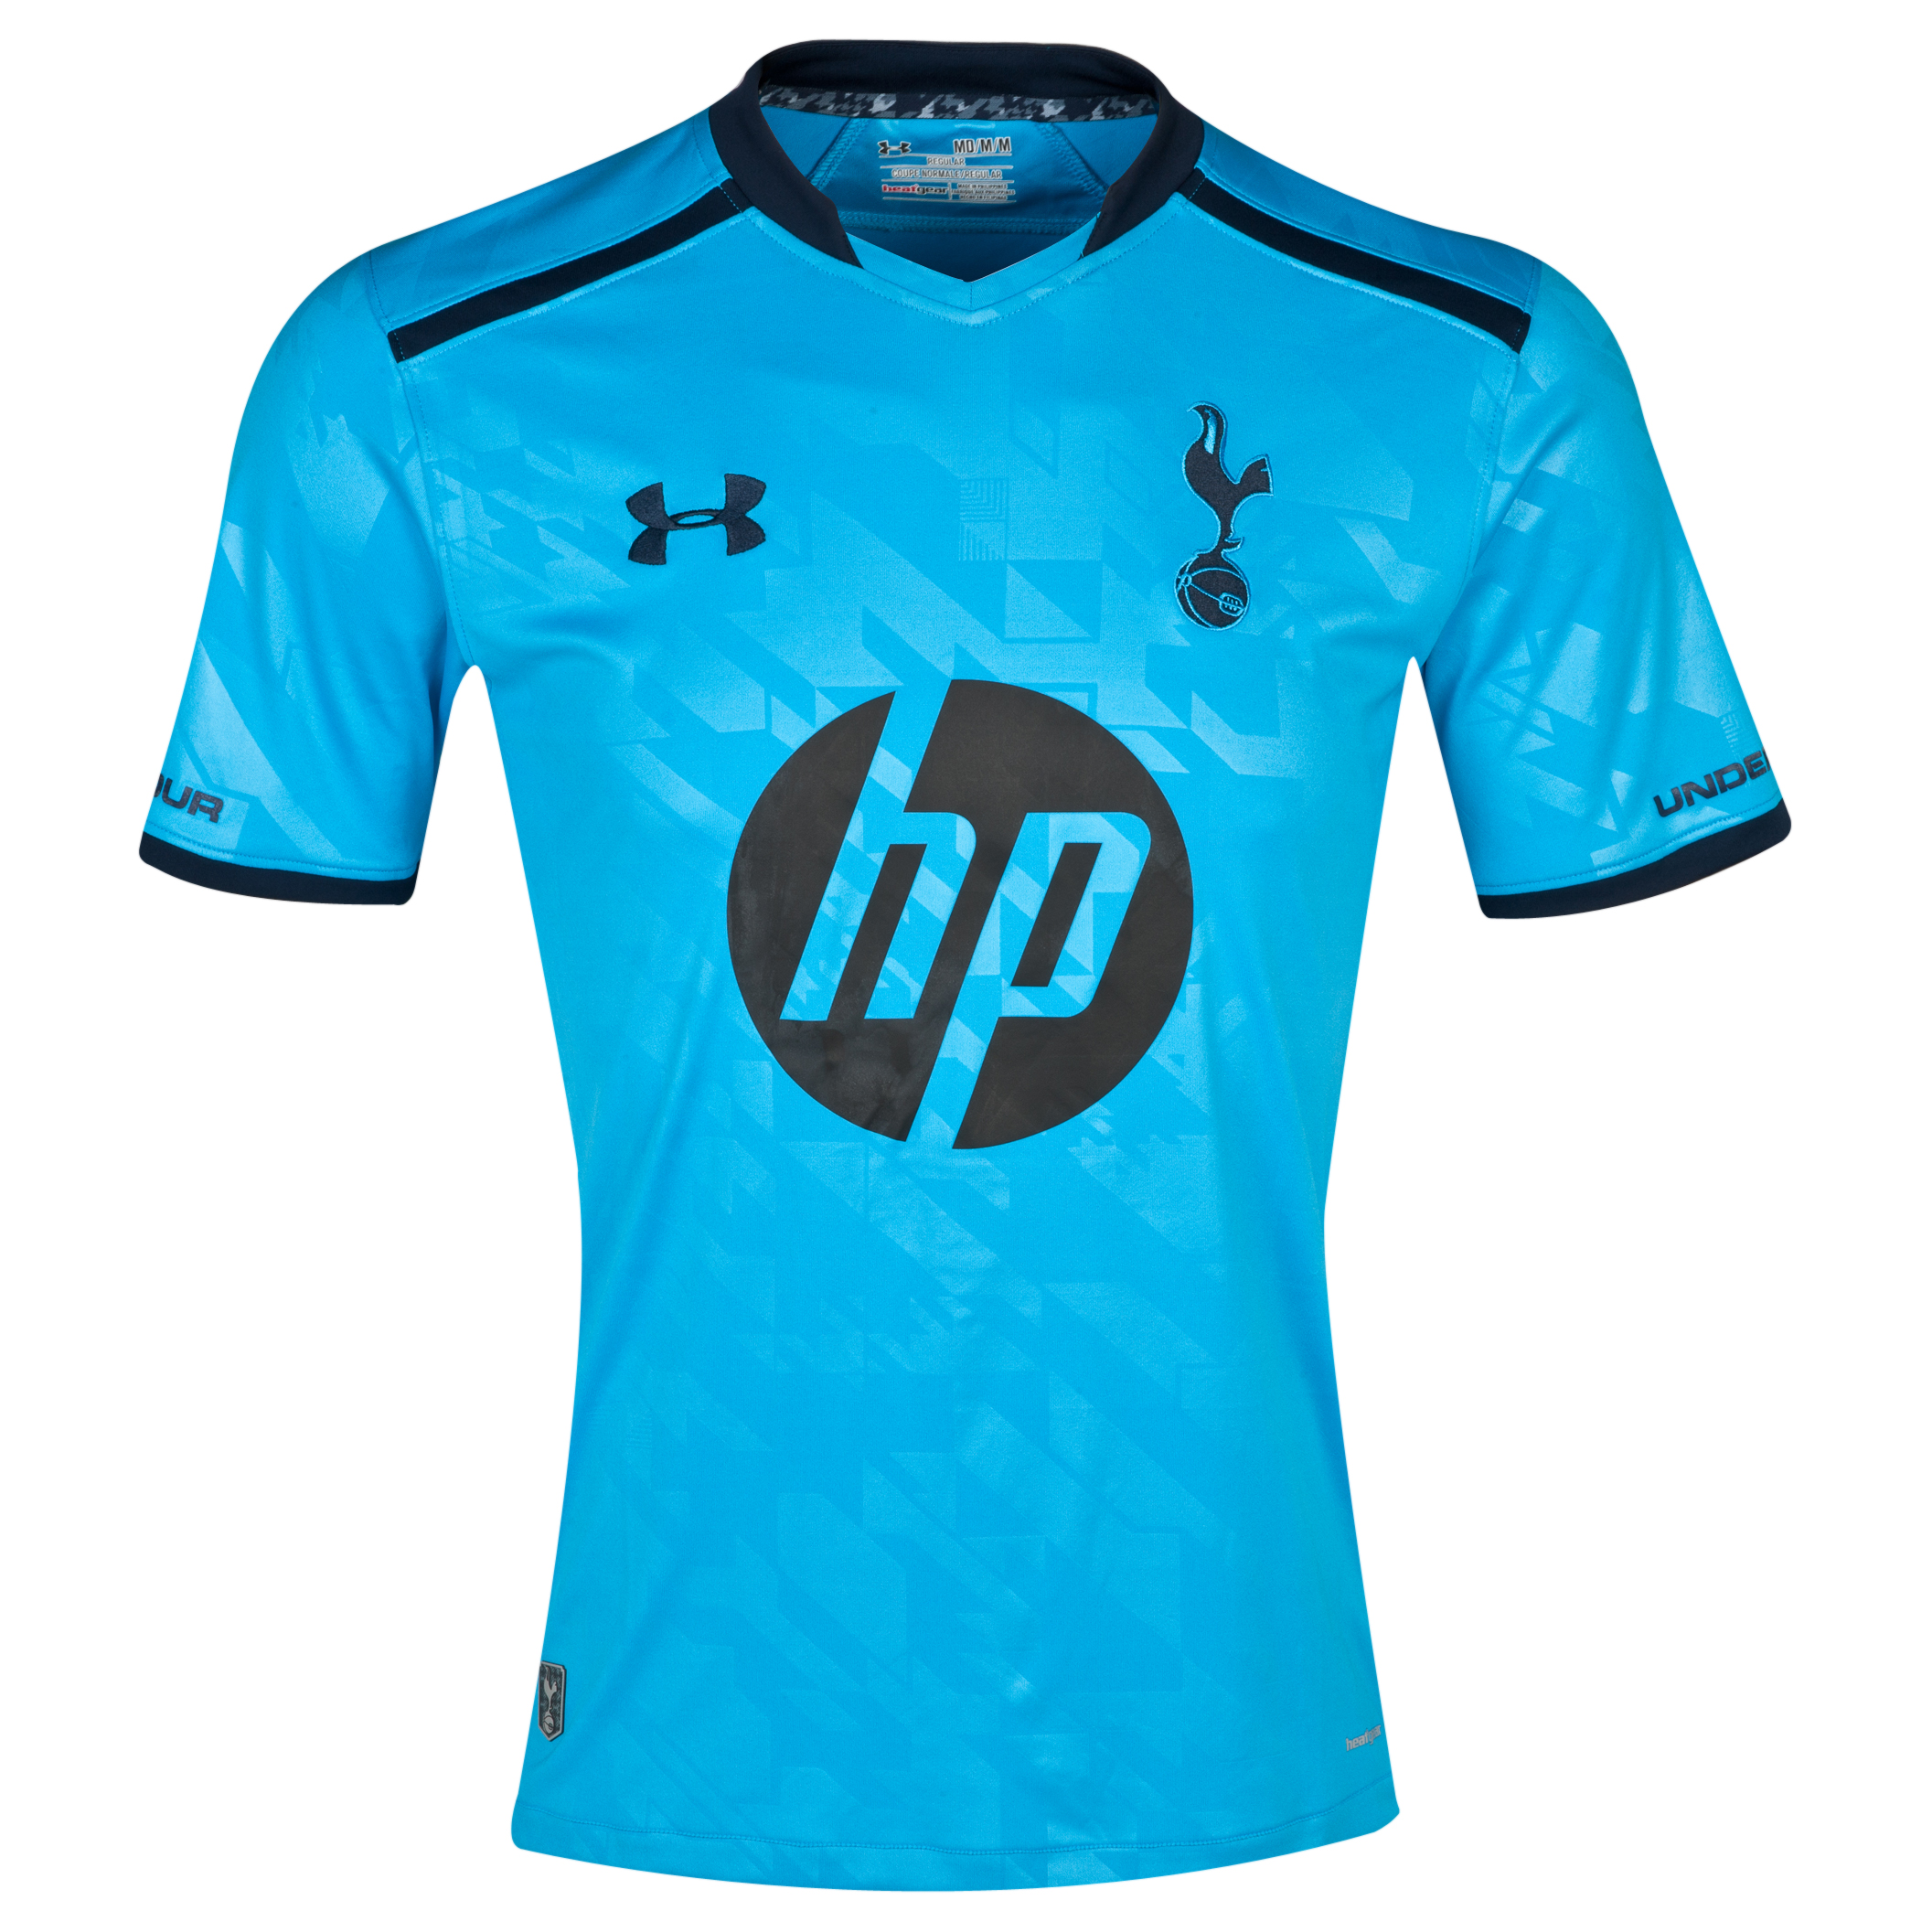 Tottenham Hotspur Away Shirt 2013/14